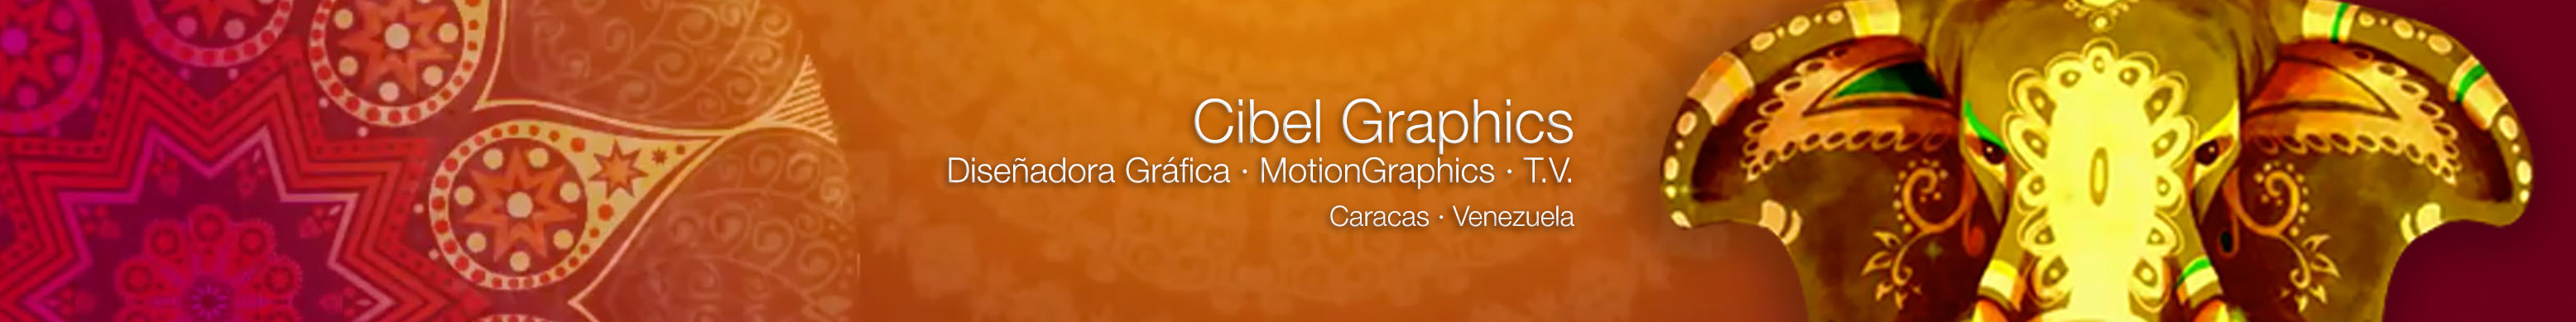 Cibel Graphics's profile banner